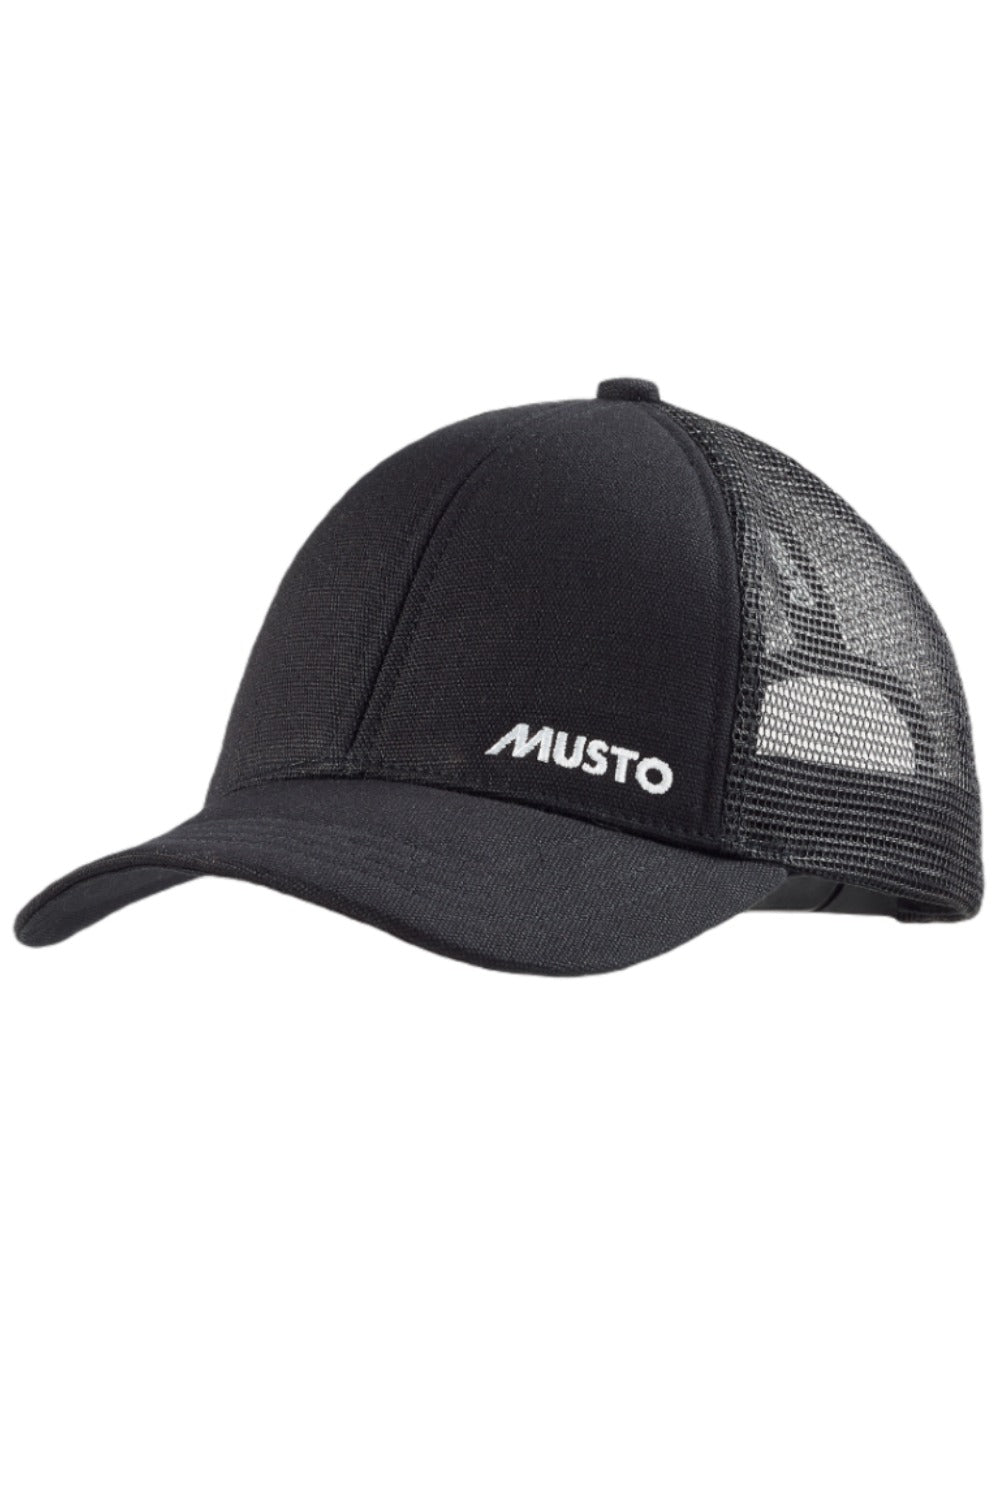 Musto Trucker Cap Black